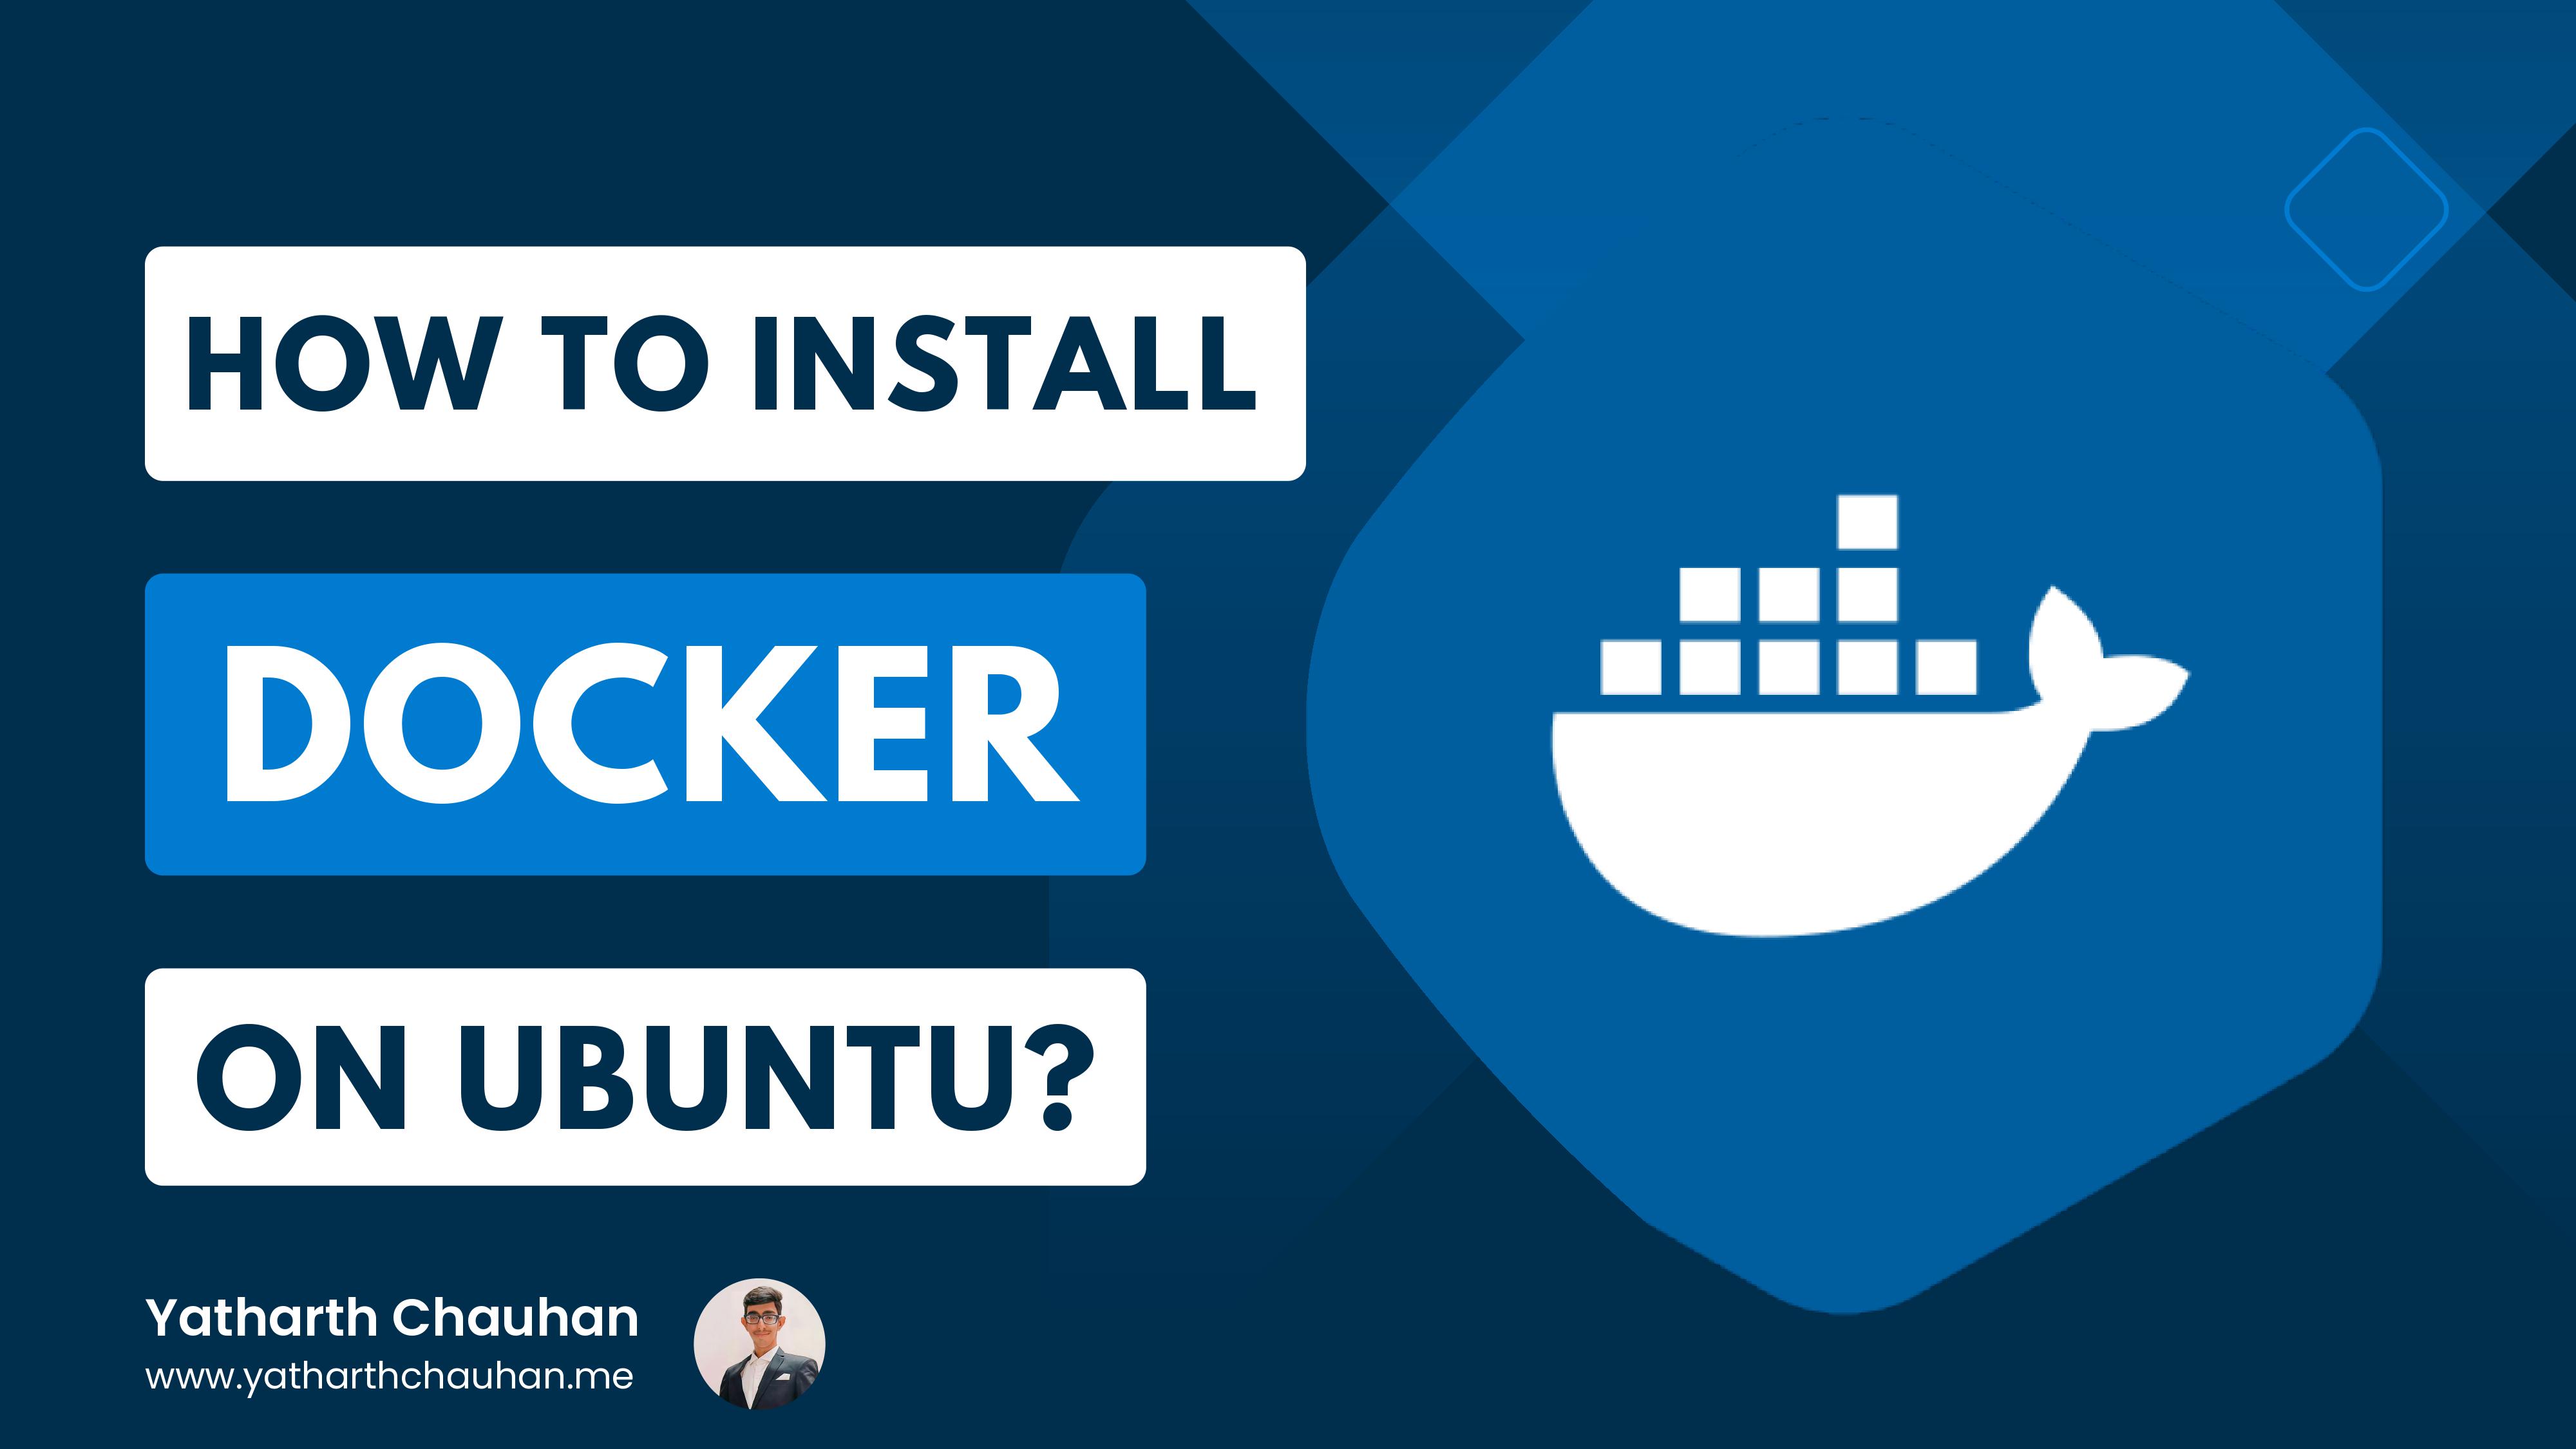 How to Install Docker on ubuntu?